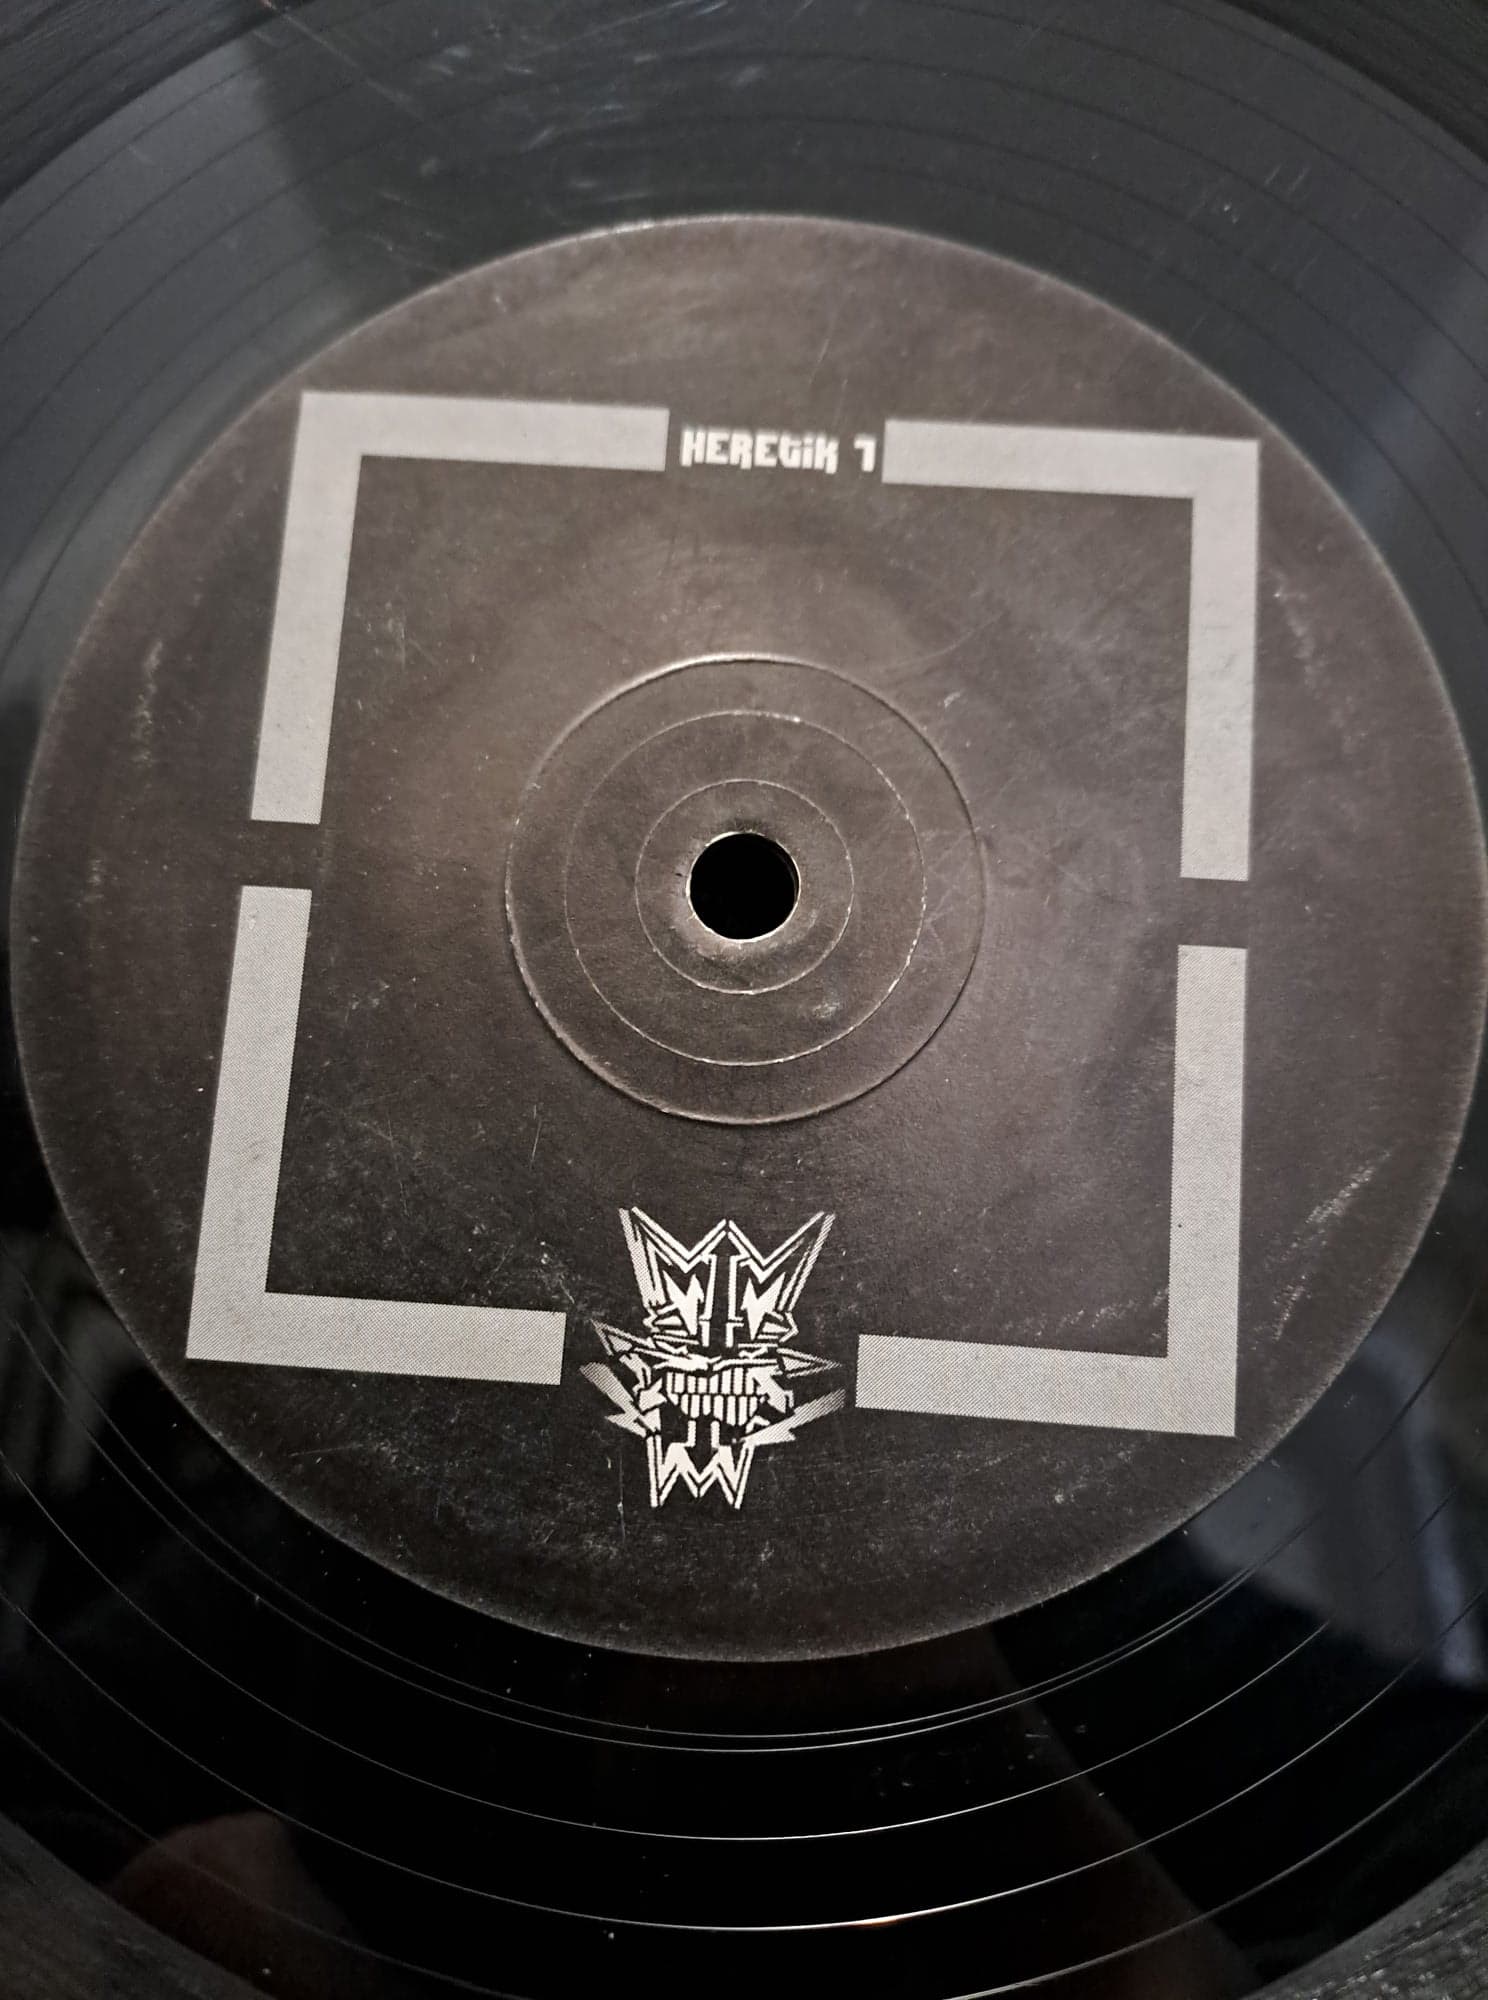 Heretik 07 - vinyle hardcore